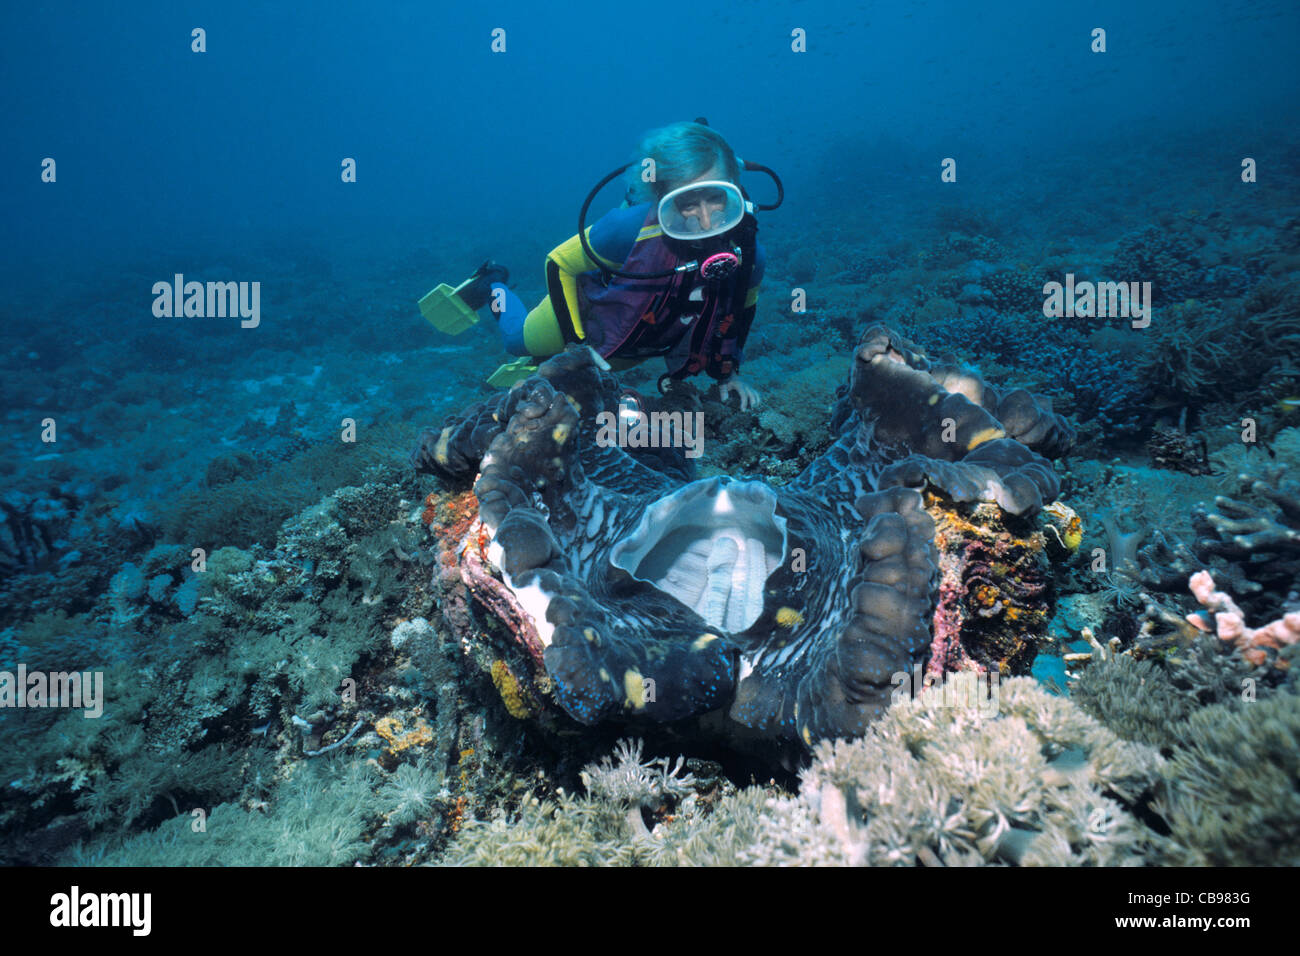 Scuba Diver en un gigante tridacna clam (Tridacna gigas), molusco bivalvo vivo más grande, Irian Jaya, Neu Guinea, Indonesia, Asia Foto de stock